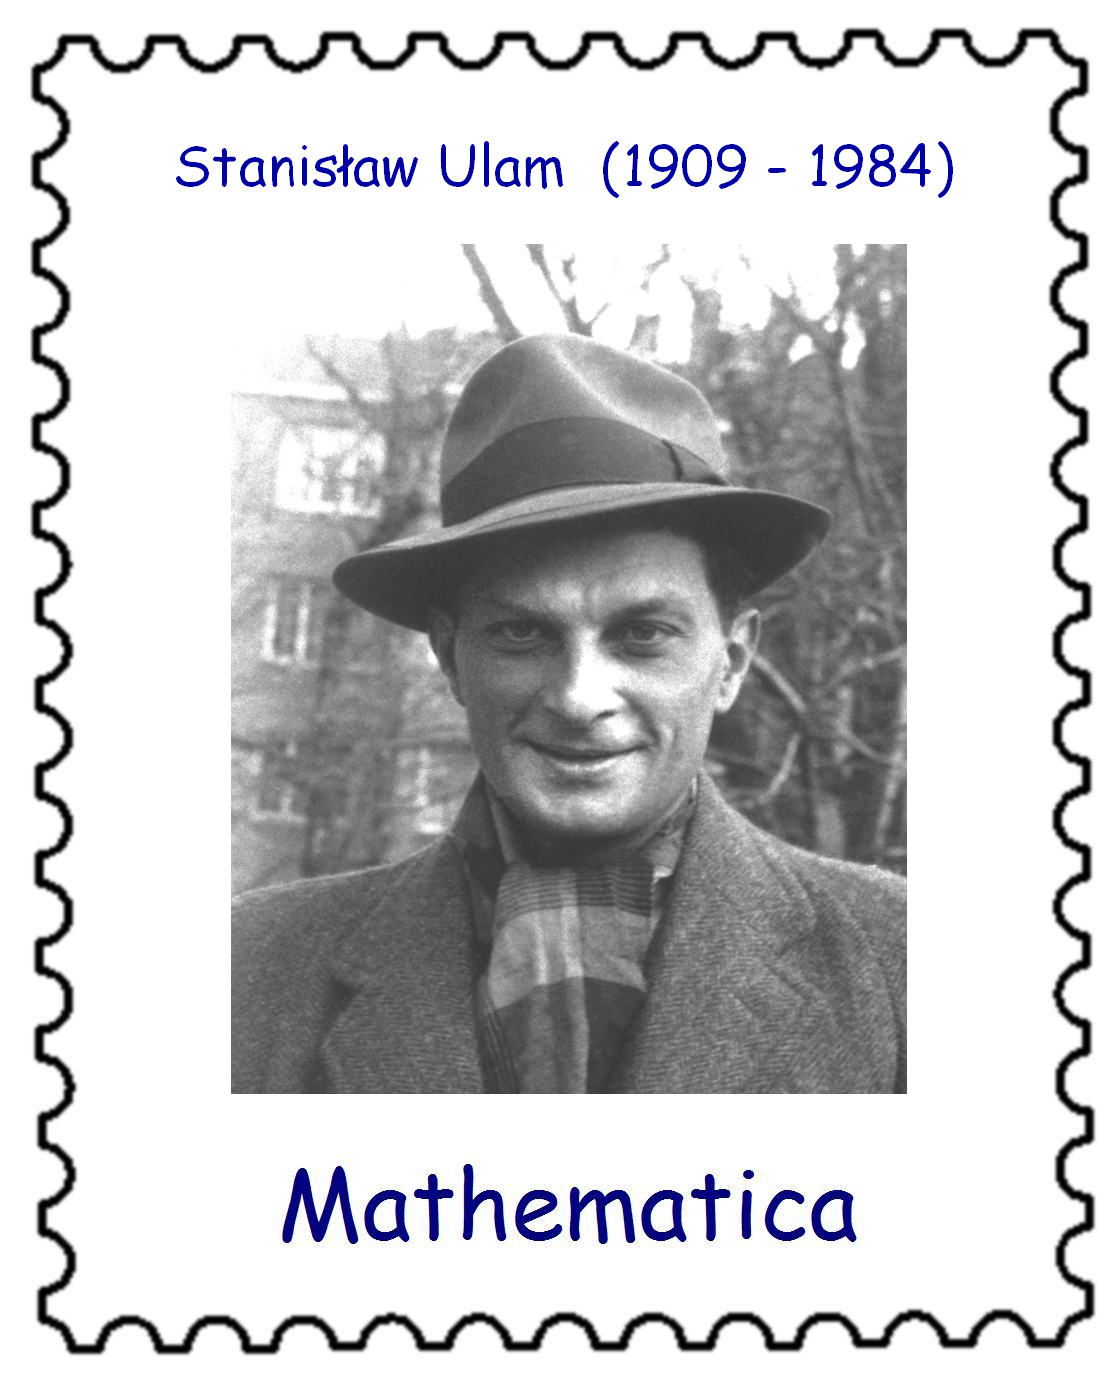 Stanislaw Ulam